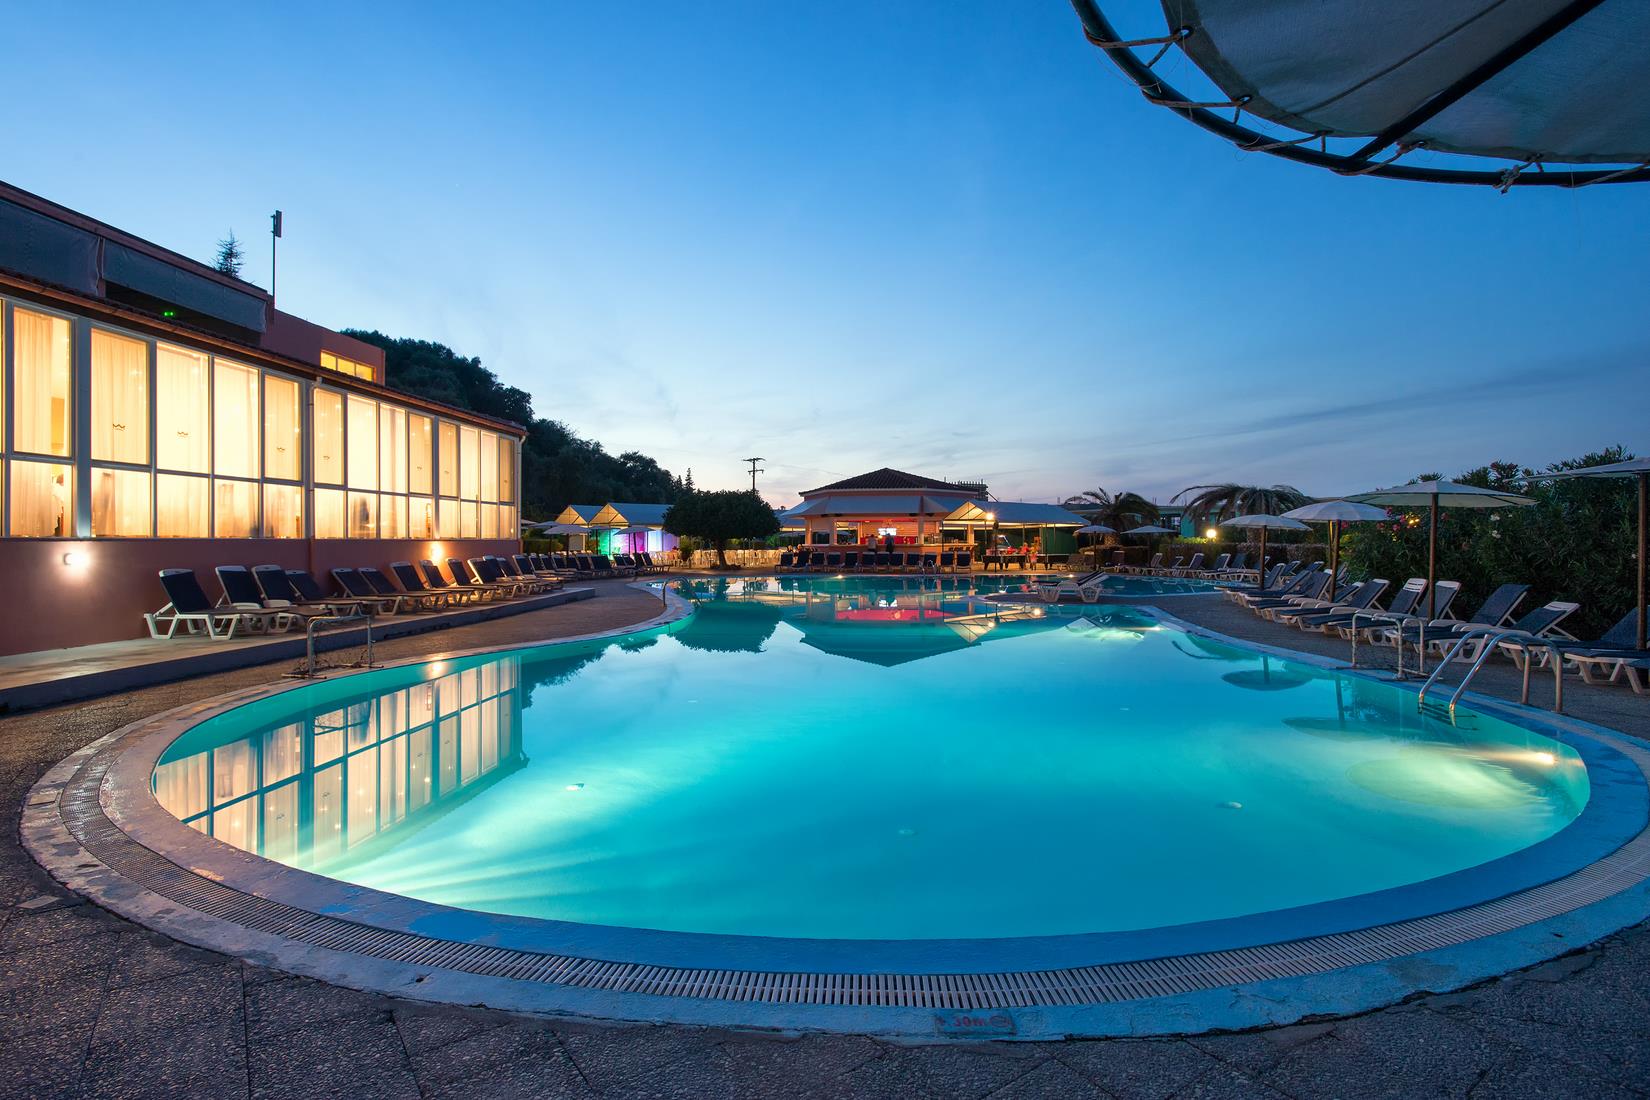 Hotel Sidari Panorama Resort - Κέρκυρα ✦ 2 Ημέρες (1 Διανυκτέρευση) ✦ 2 άτομα + 1 παιδί έως 12 ετών ✦ 12 ✦ 09/05/2022 έως 30/09/2022 ✦ Κοντά στην Παραλία!